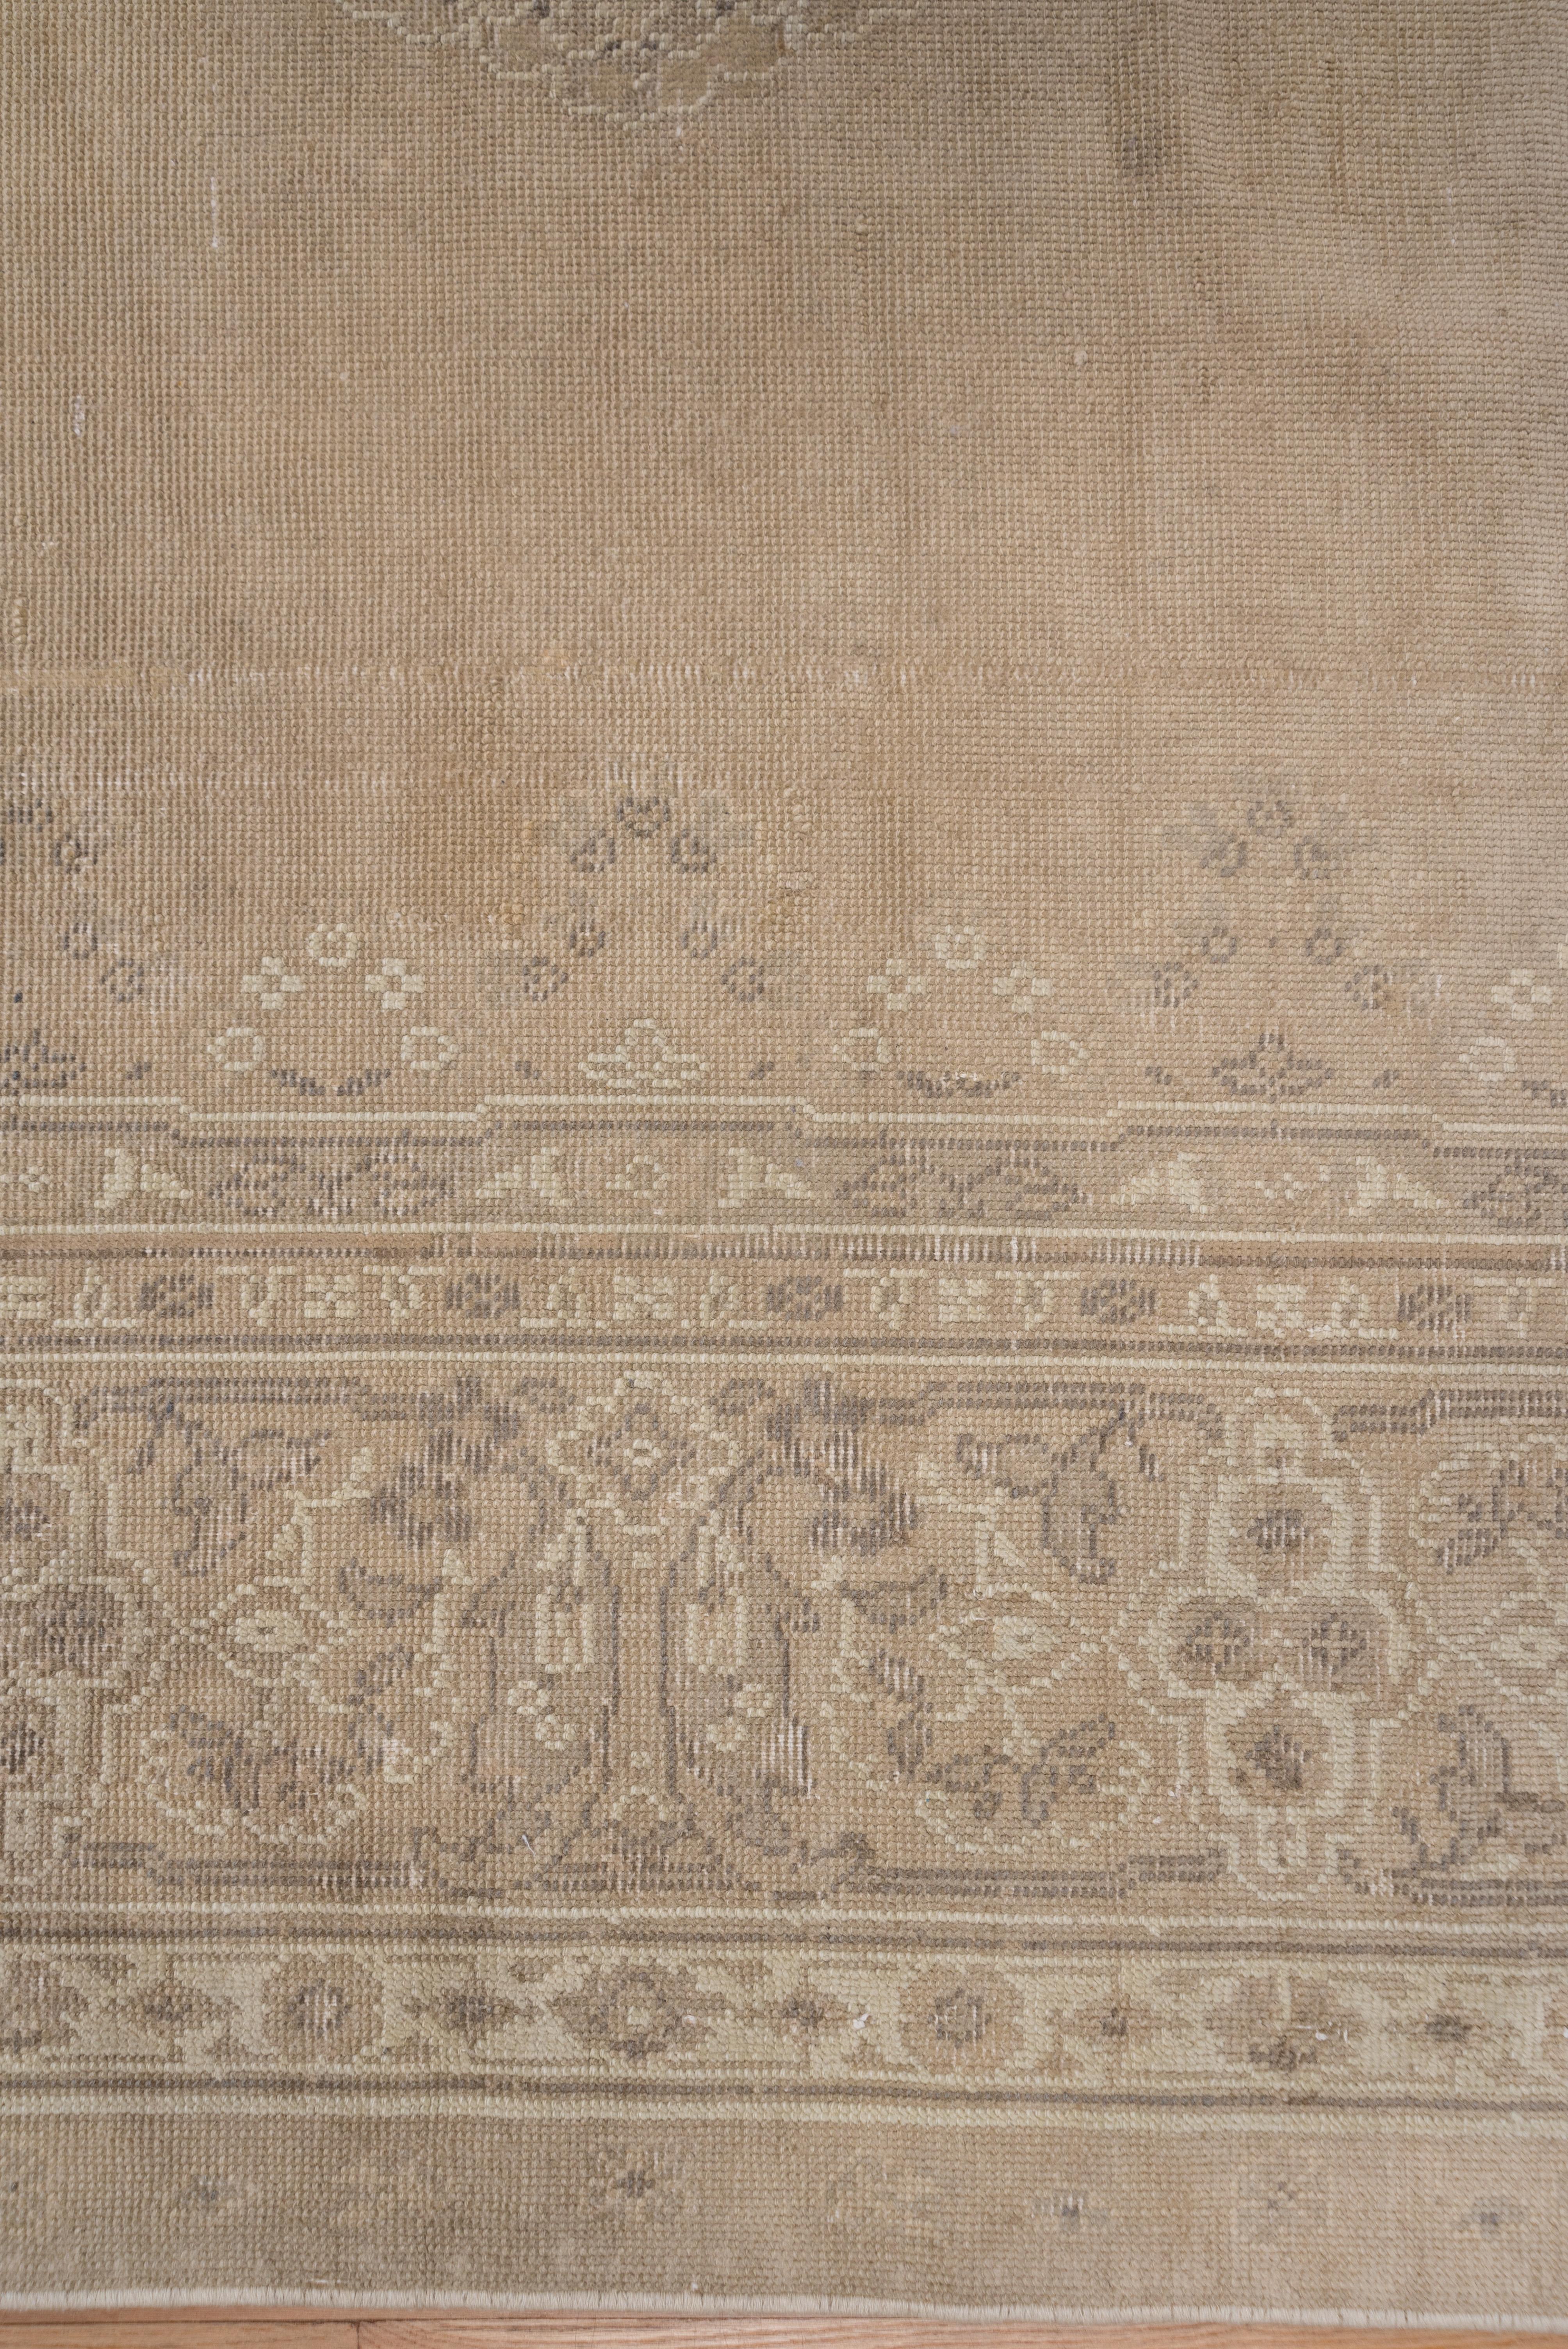 Wool Antique Turkish Sivas Large Carpet, Neutral Palette, circa 1920s